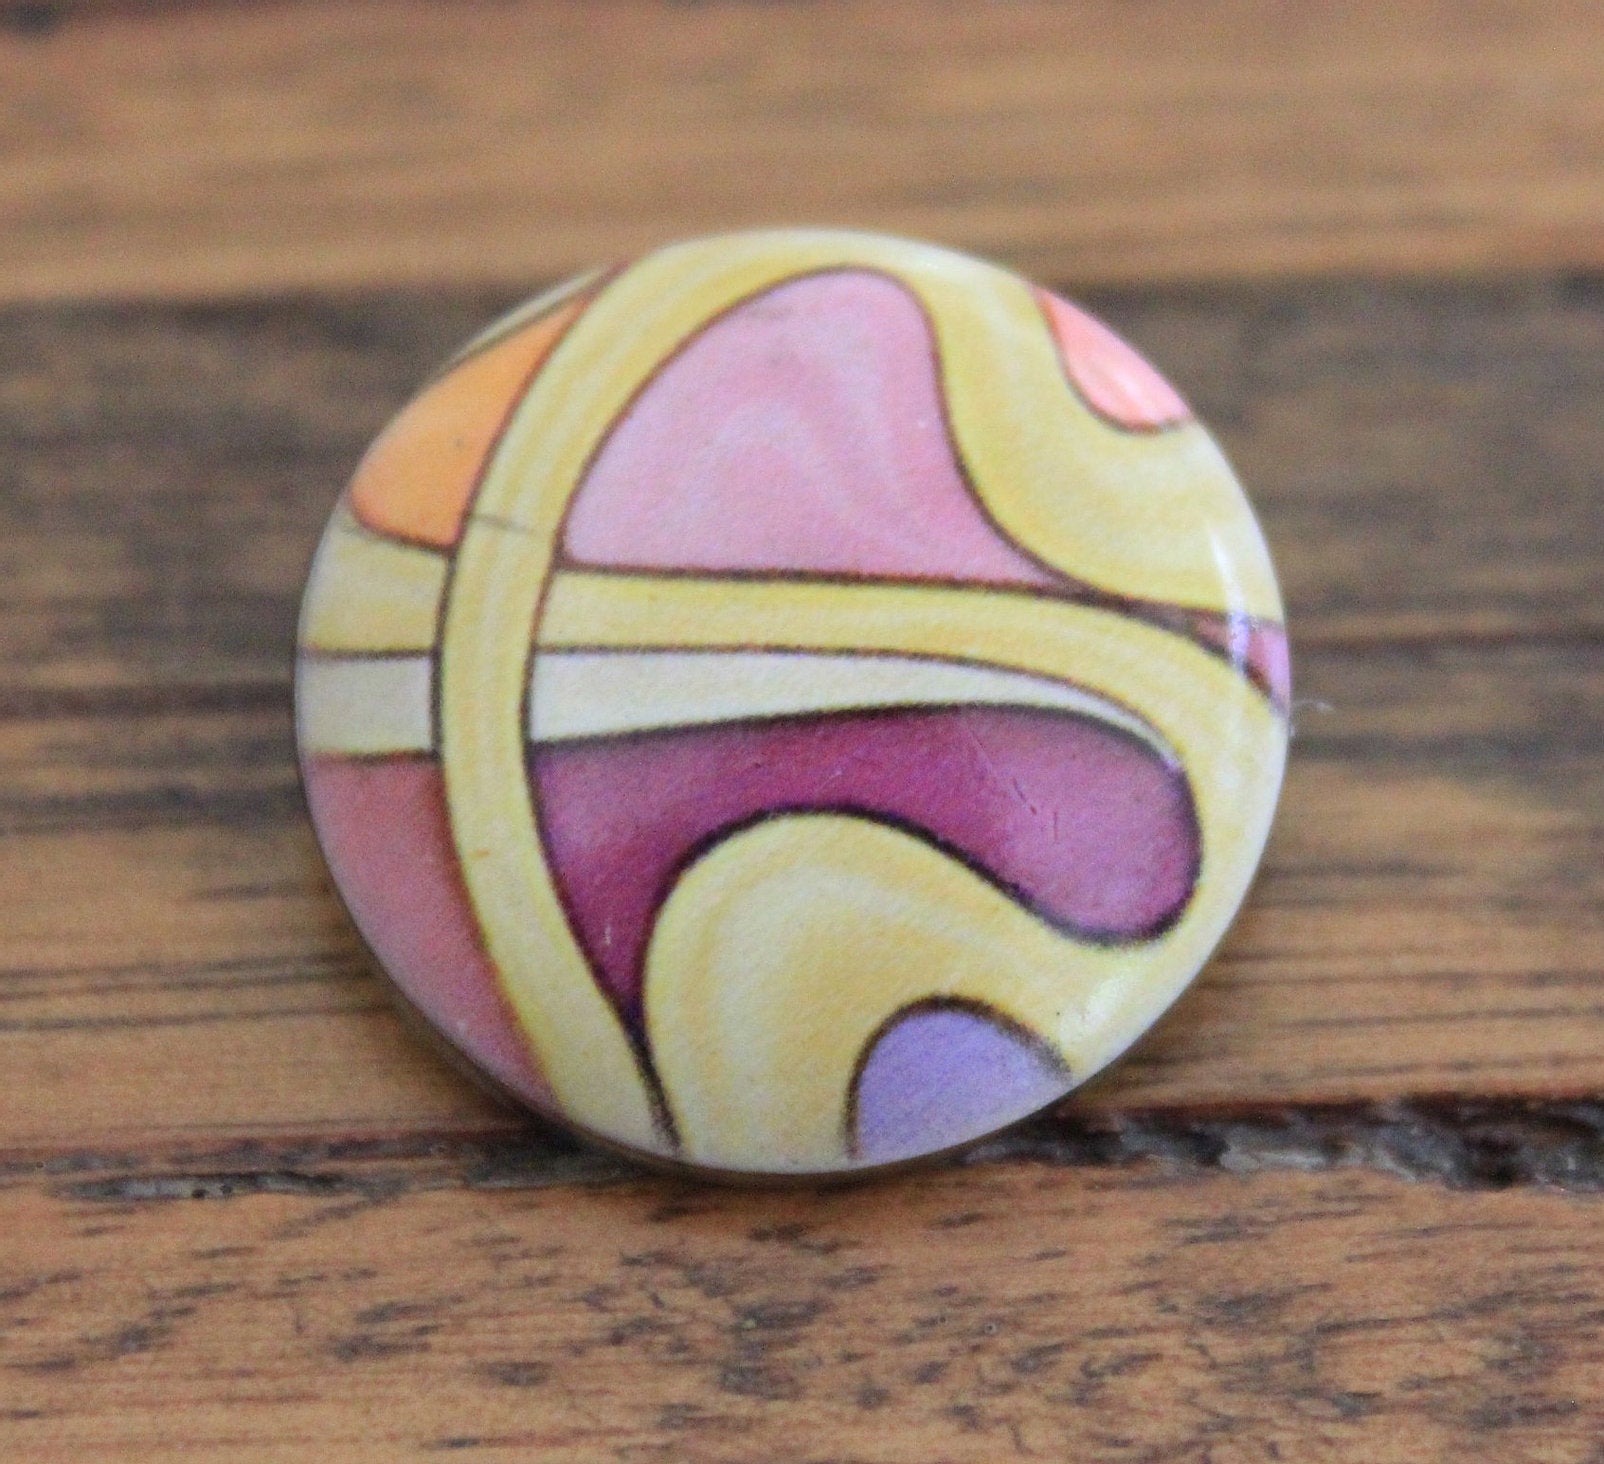 yellow swirl pattern on a pink painted stone button